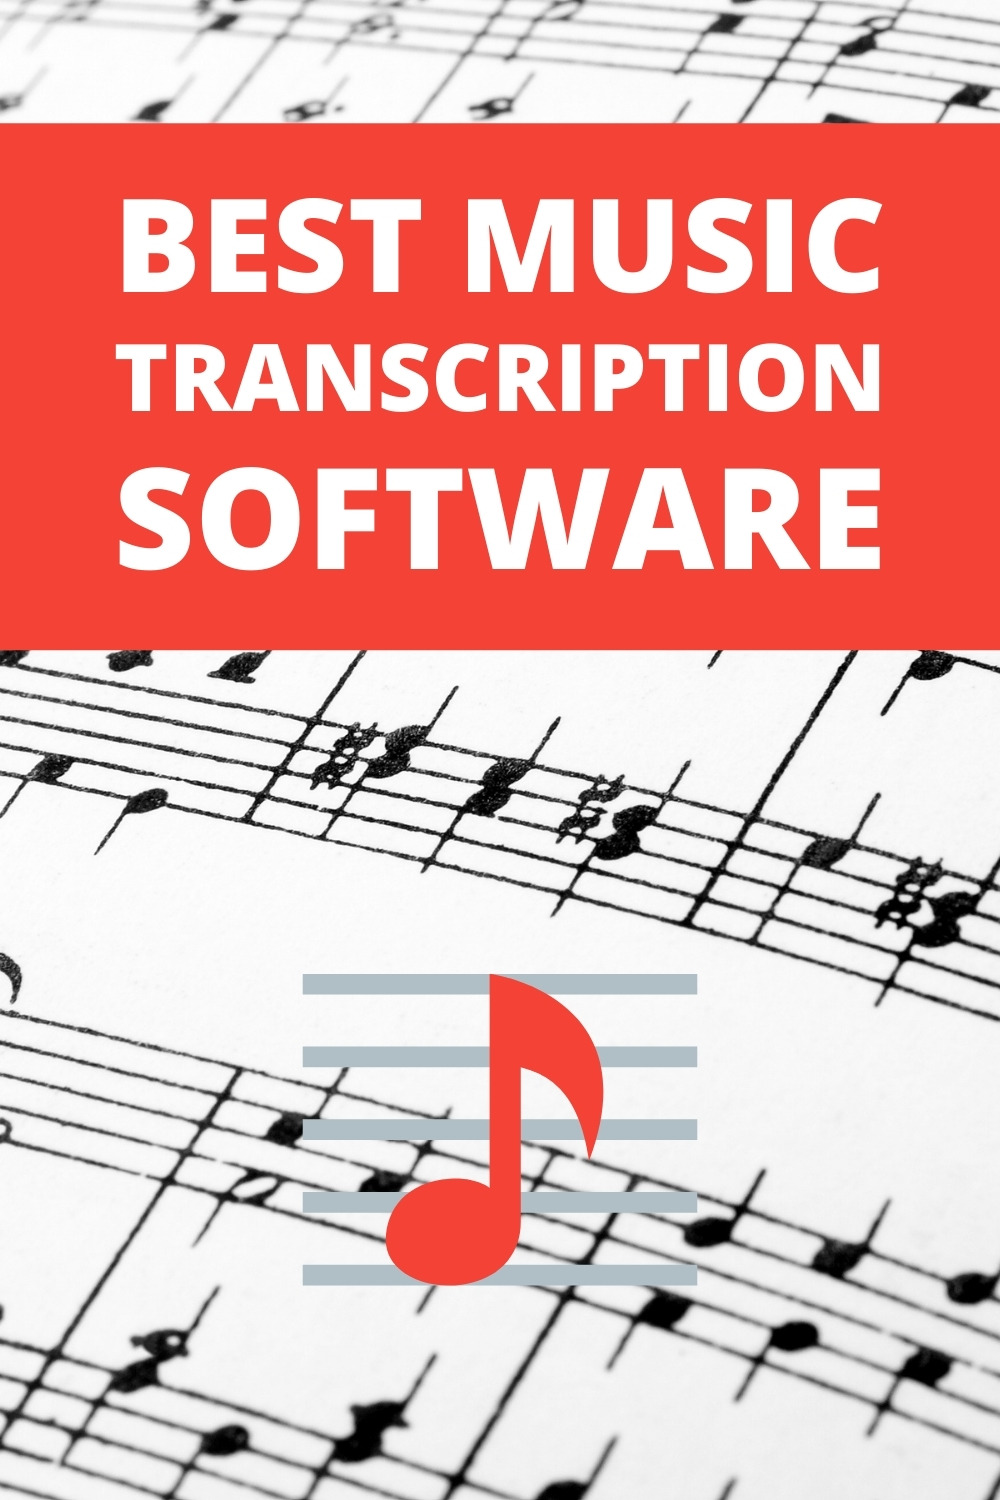 best software for transcribing music pinterest pin